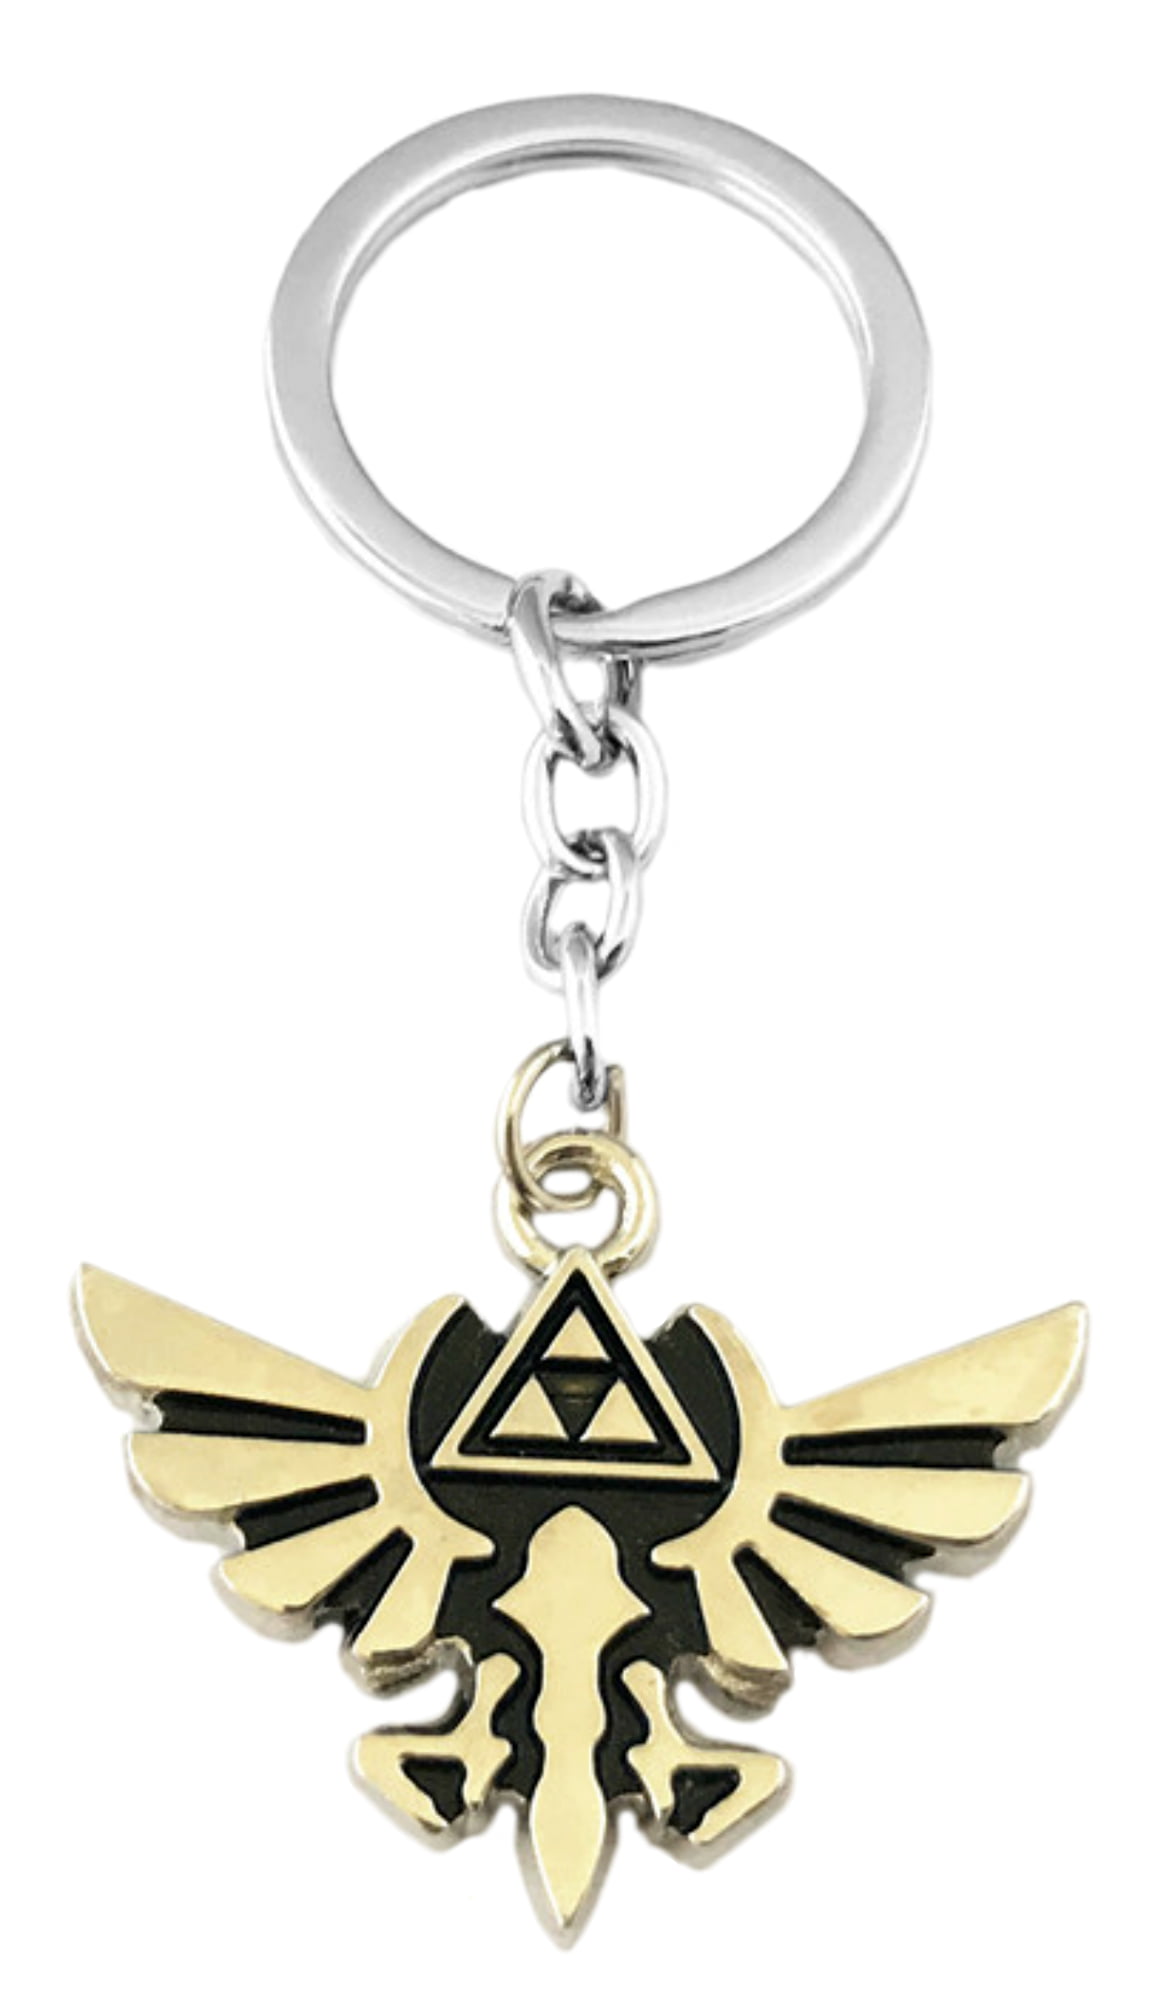 The Legend of Zelda Keychain Key Ring - Walmart.com